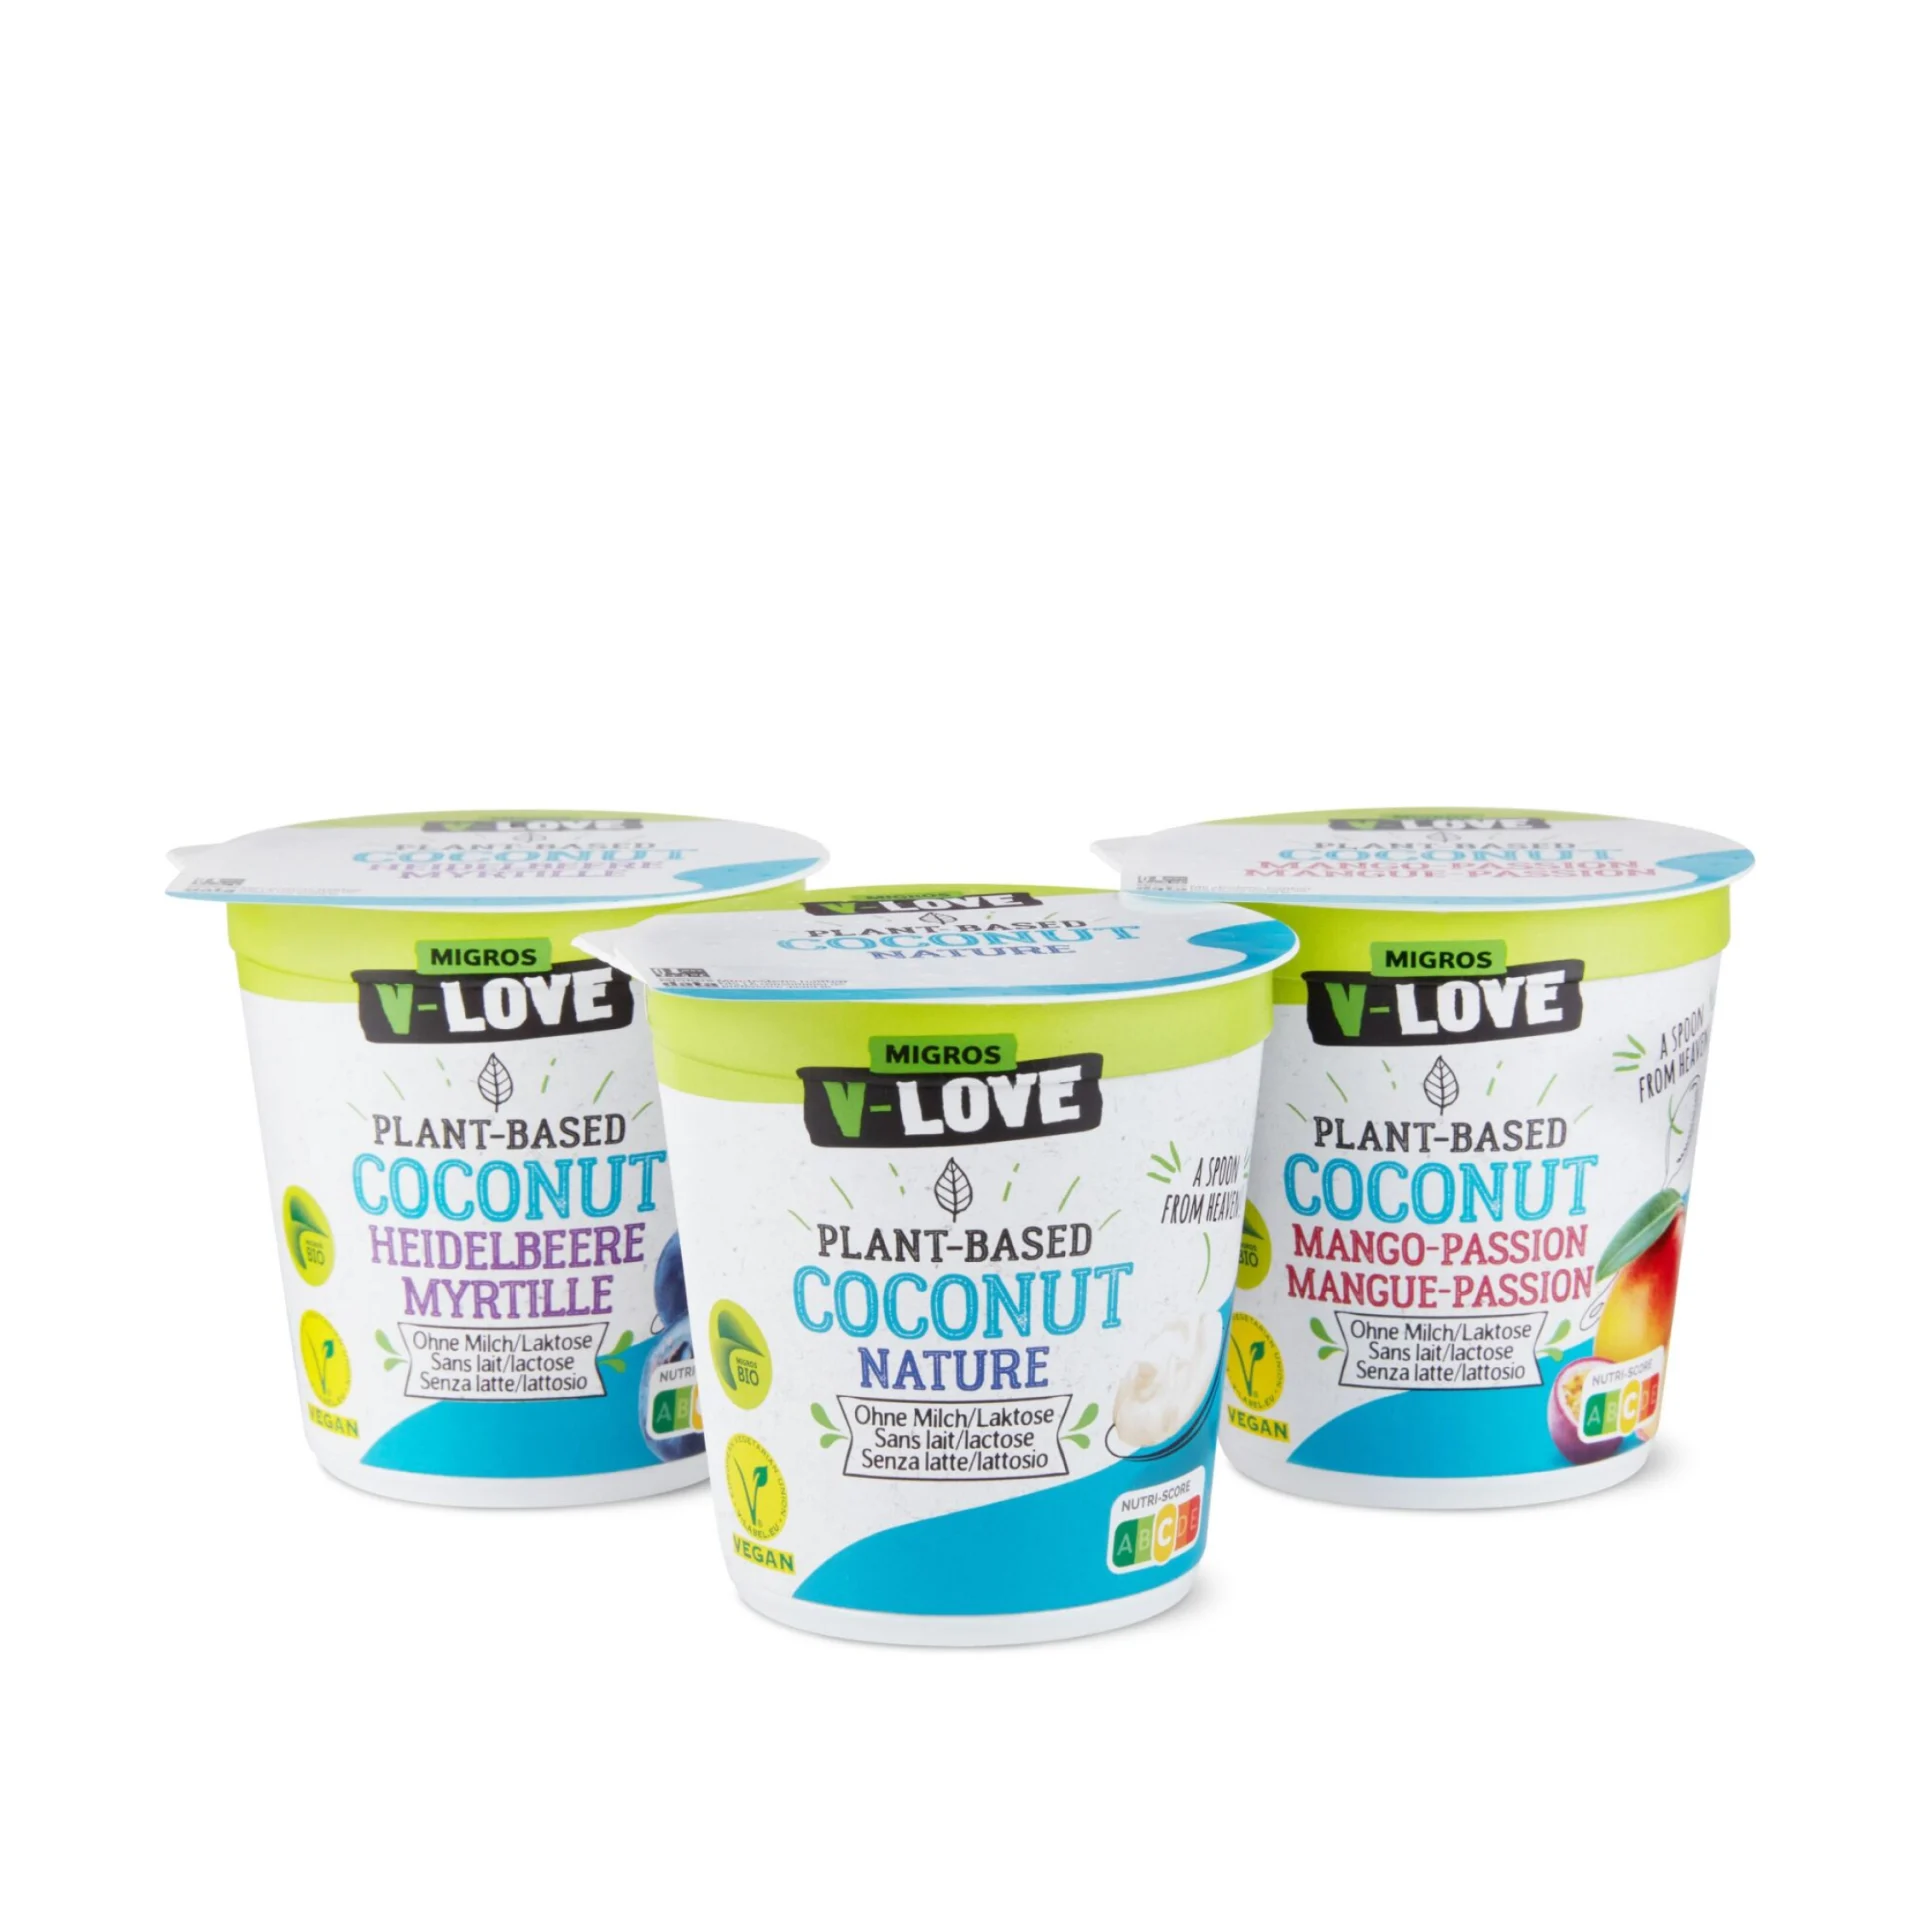 Tre packshot di diverse alternative allo yogurt V-Love.